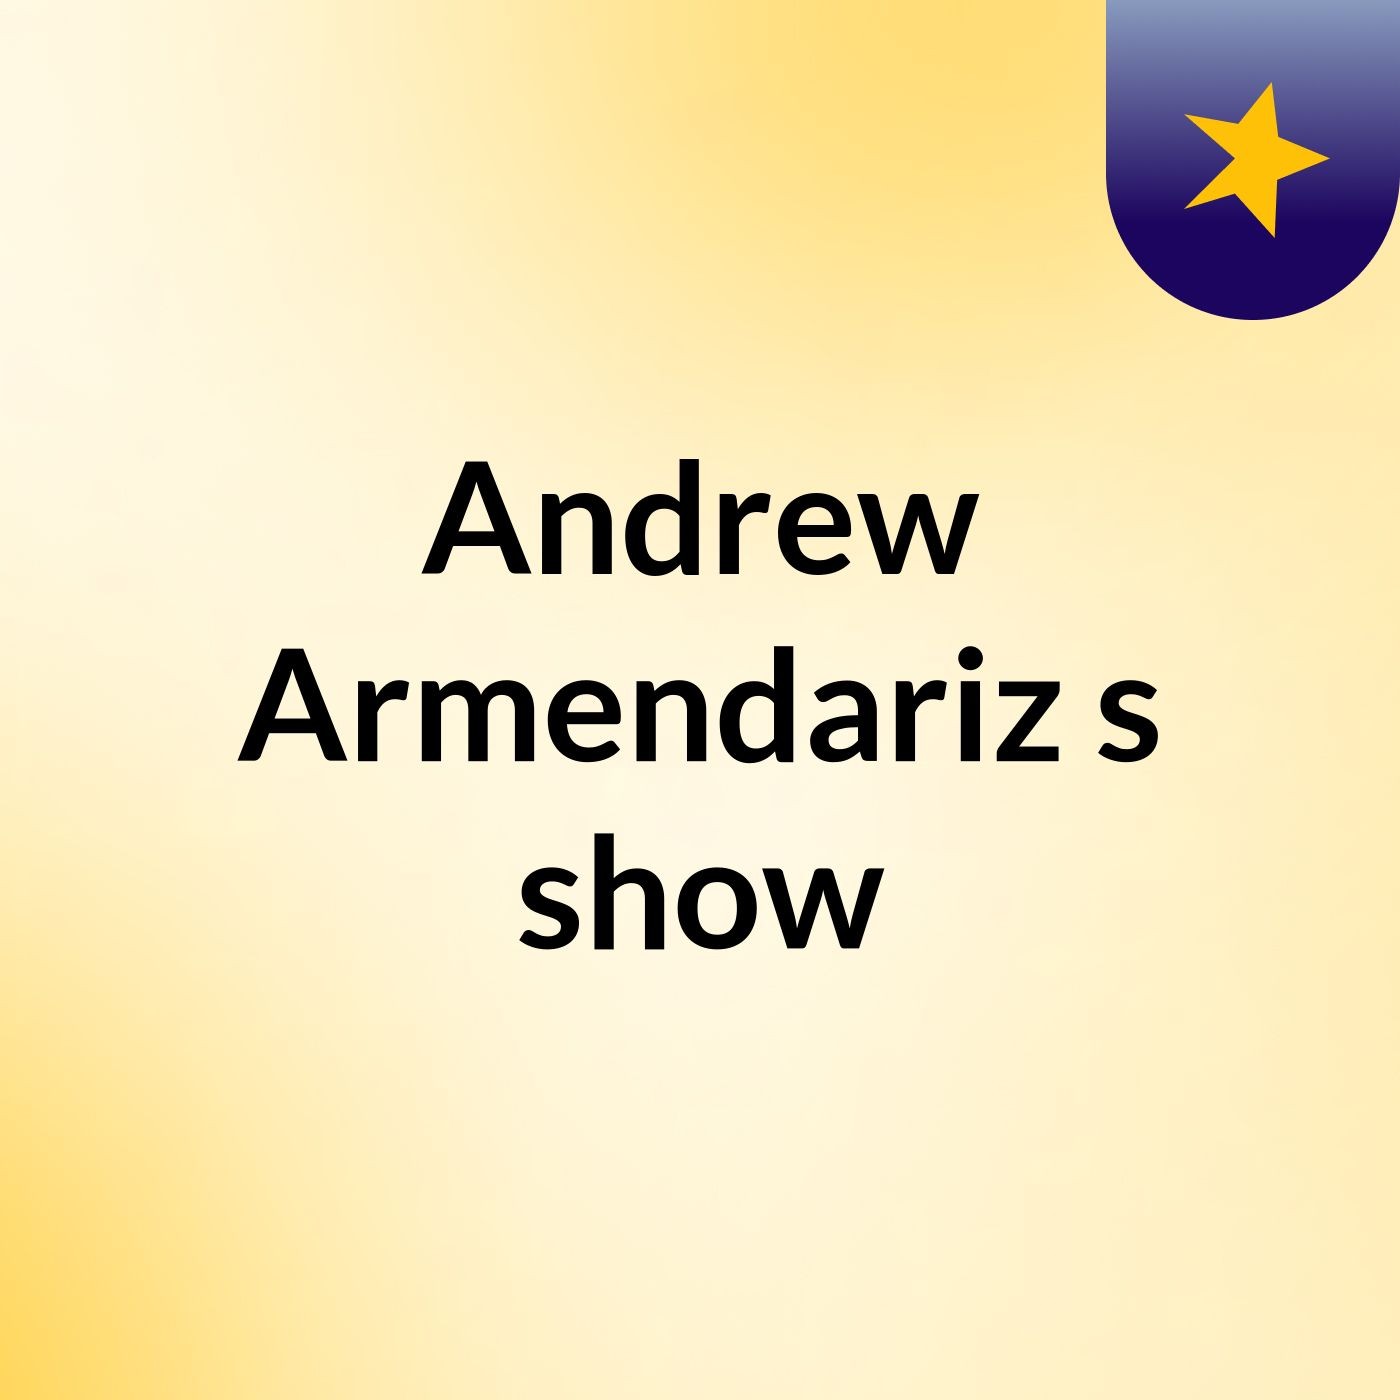 Andrew Armendariz's show